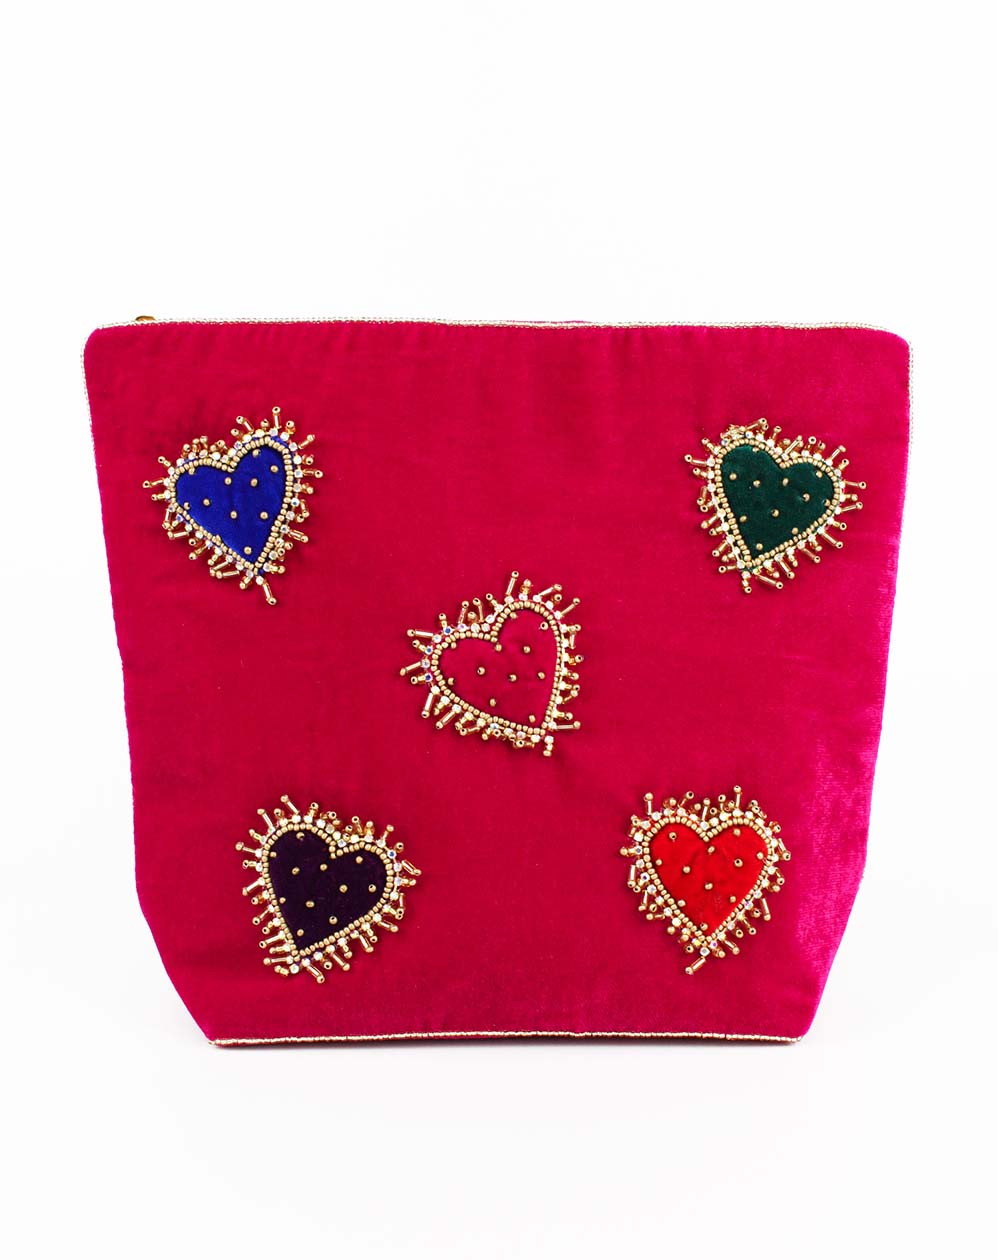 My Doris - Multi Hearts Make up Bag